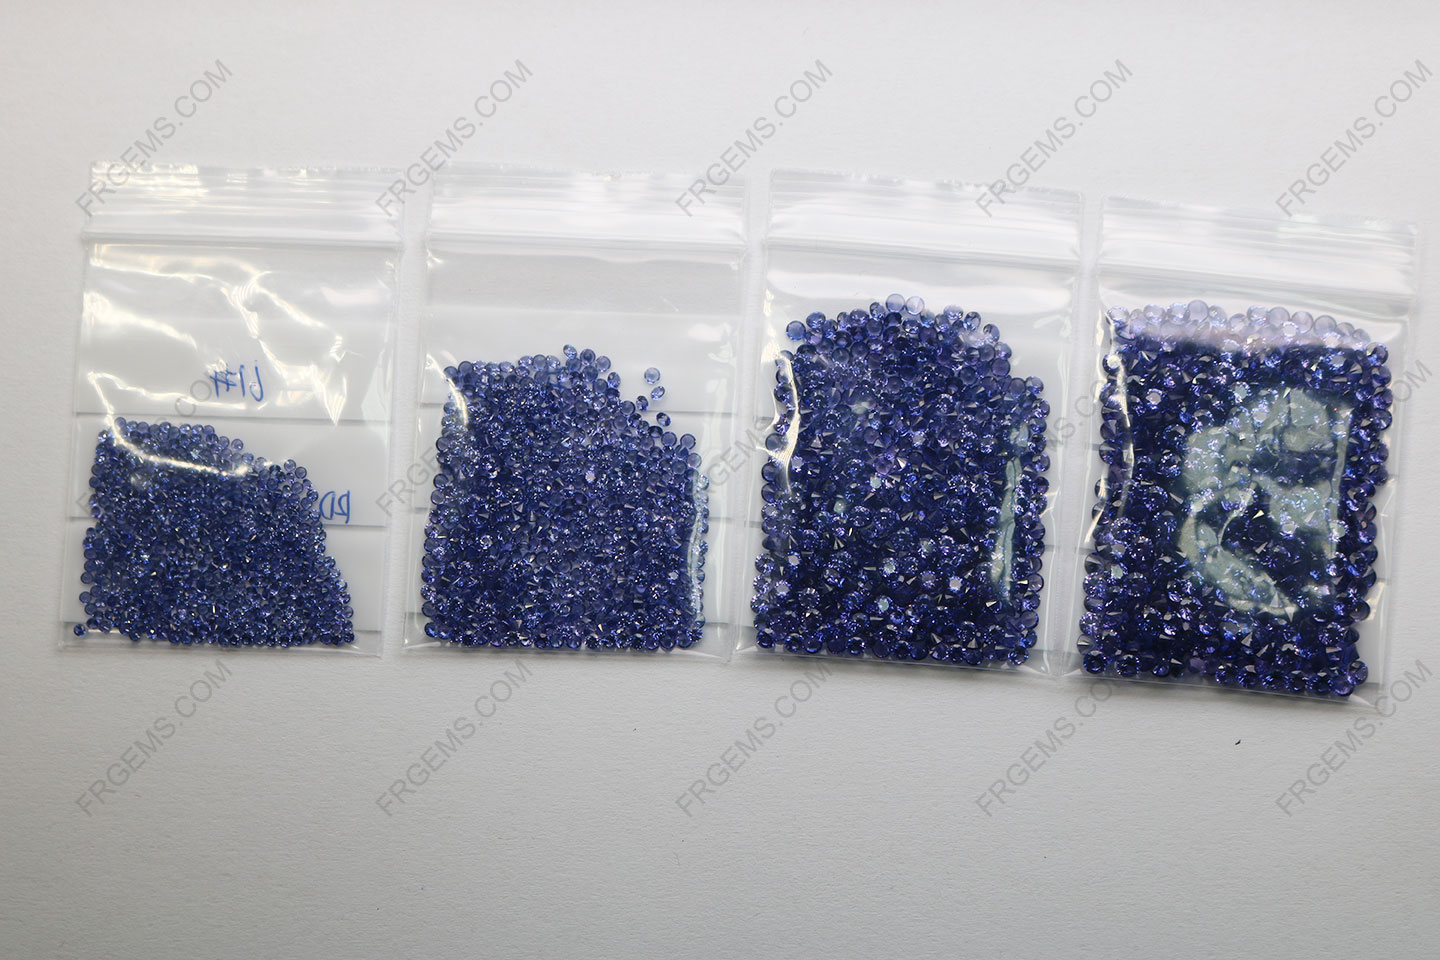 2 3mm Transparent zircon beads Natural Small stone beads tiny white zircon  beads Round Small Loose Beads quartz crystal gem bead